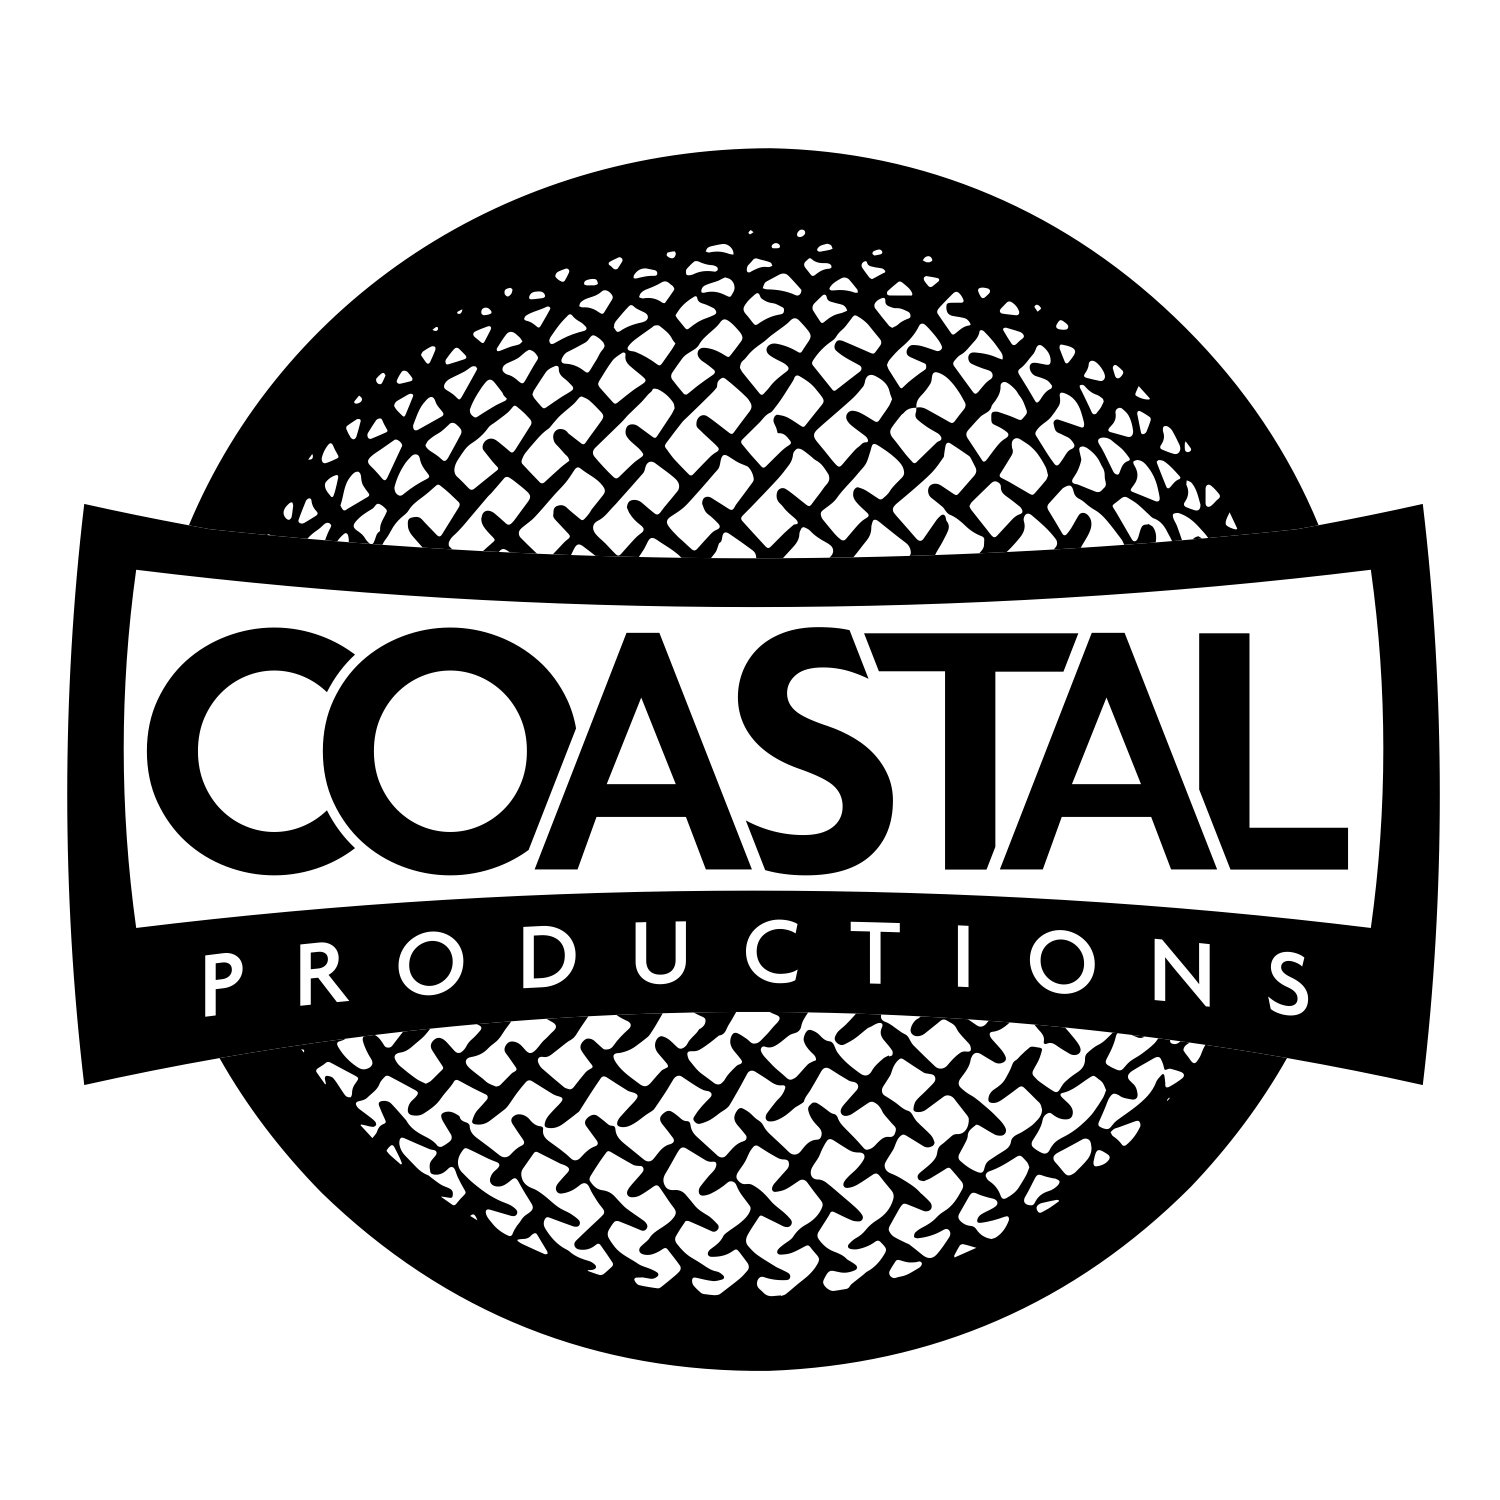 Coastal Productions